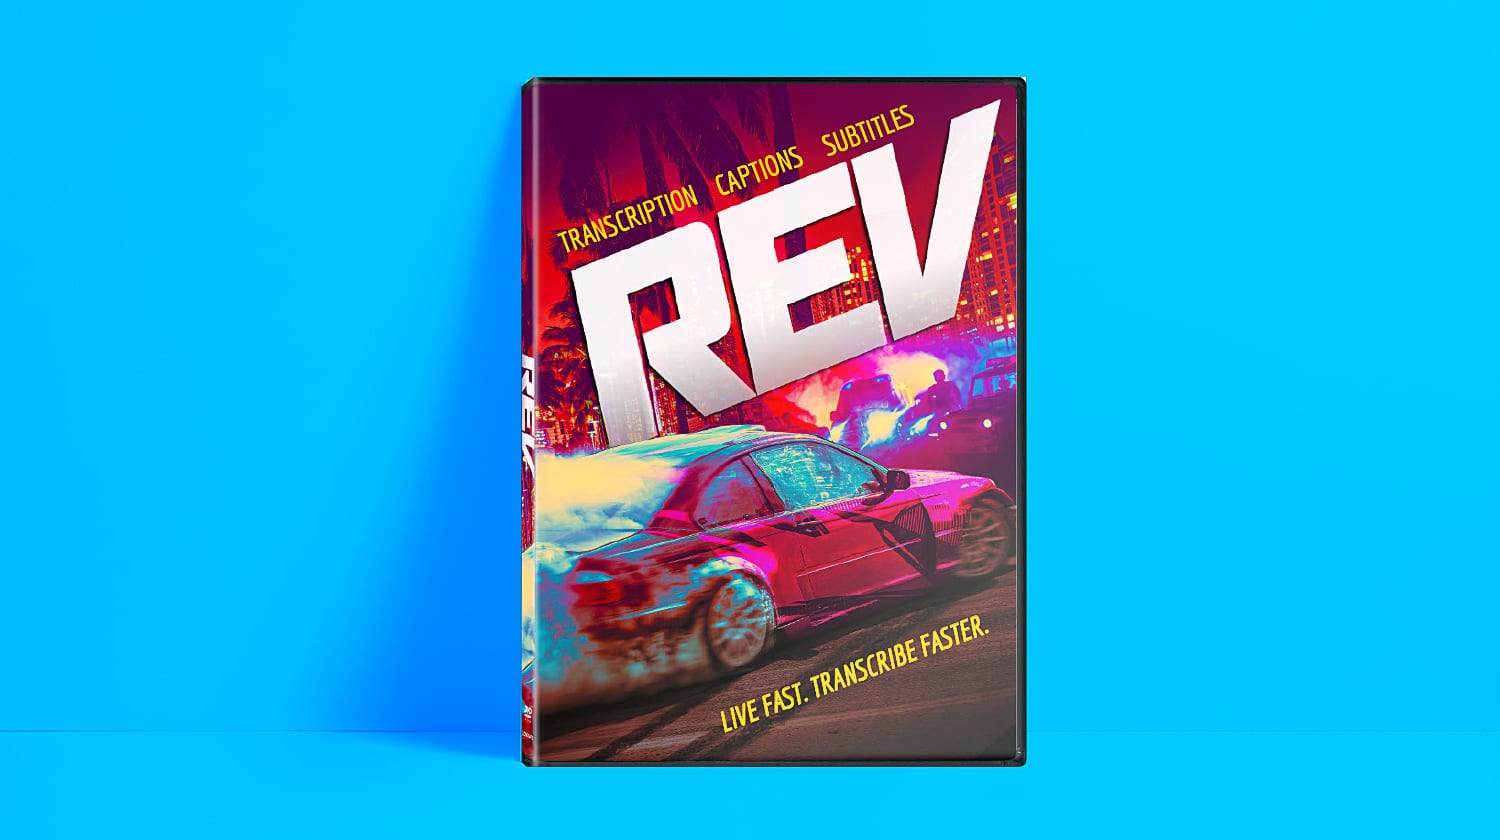 Image of the Rev Movie with some slight tweaks - beep beep